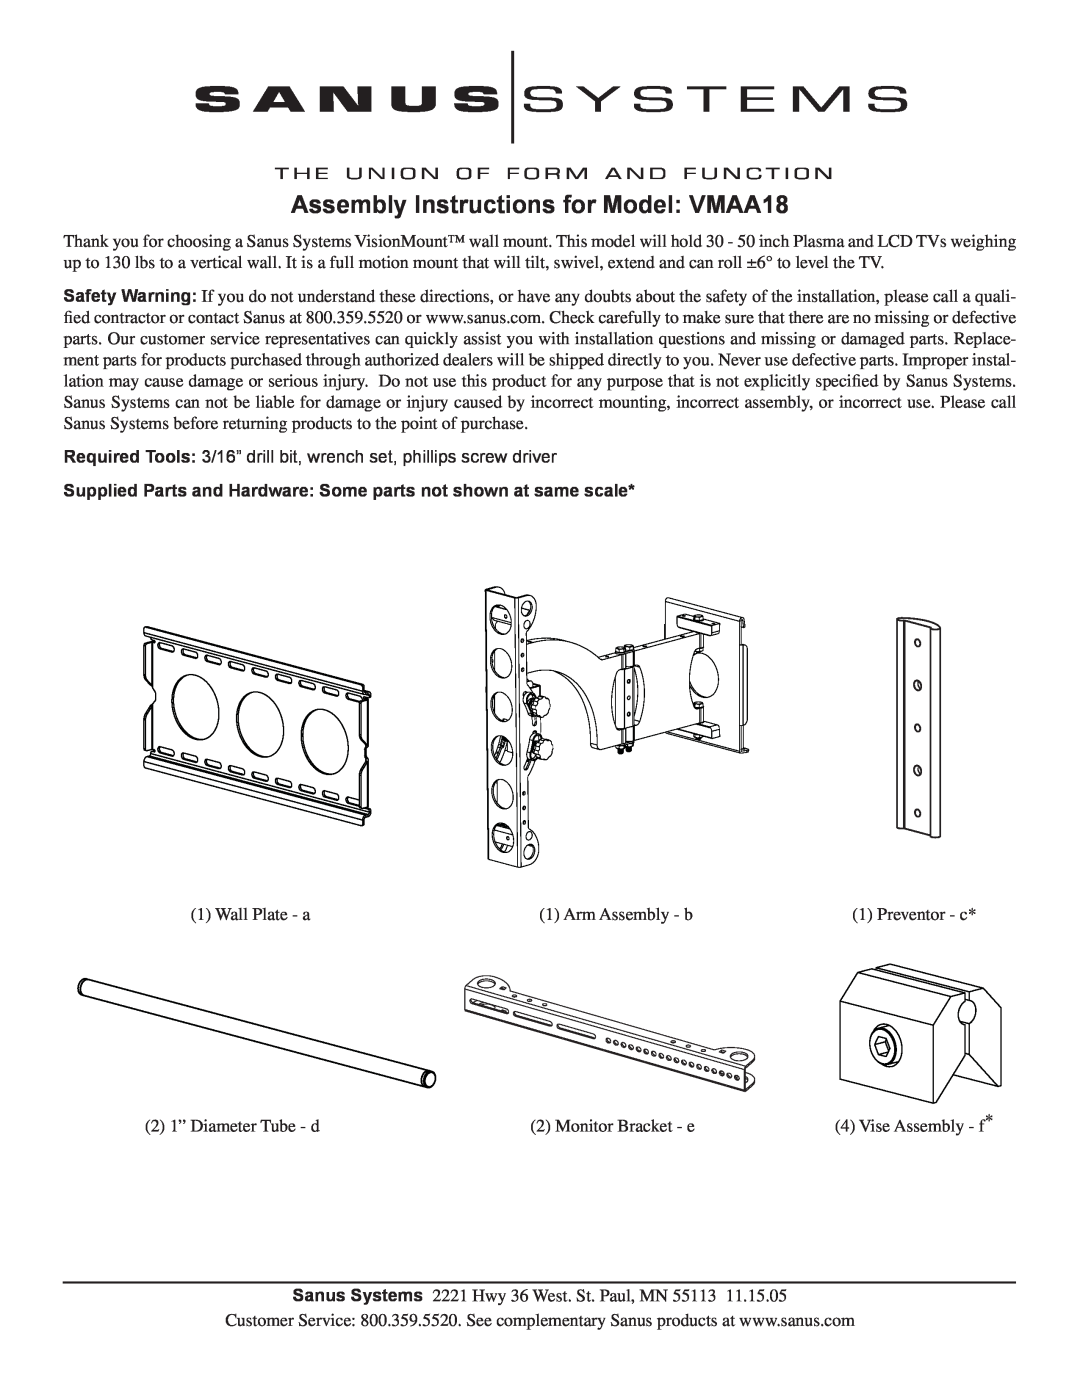 Sanus Systems VMAA18 manual 6901-100016, Milestone AV Technologies 